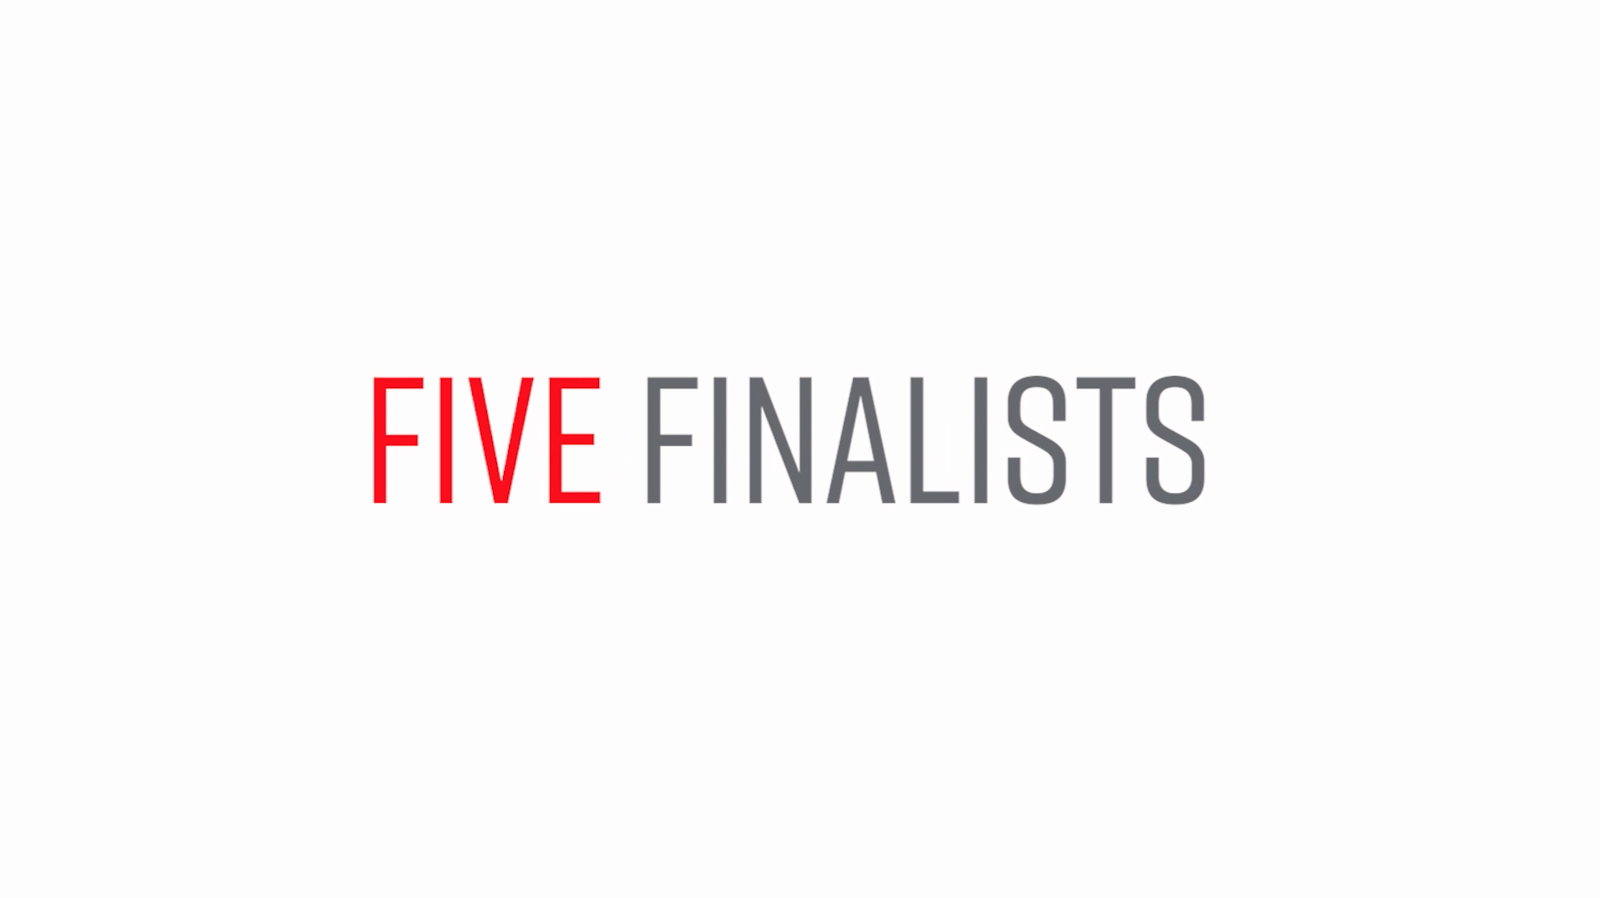 Five finalists